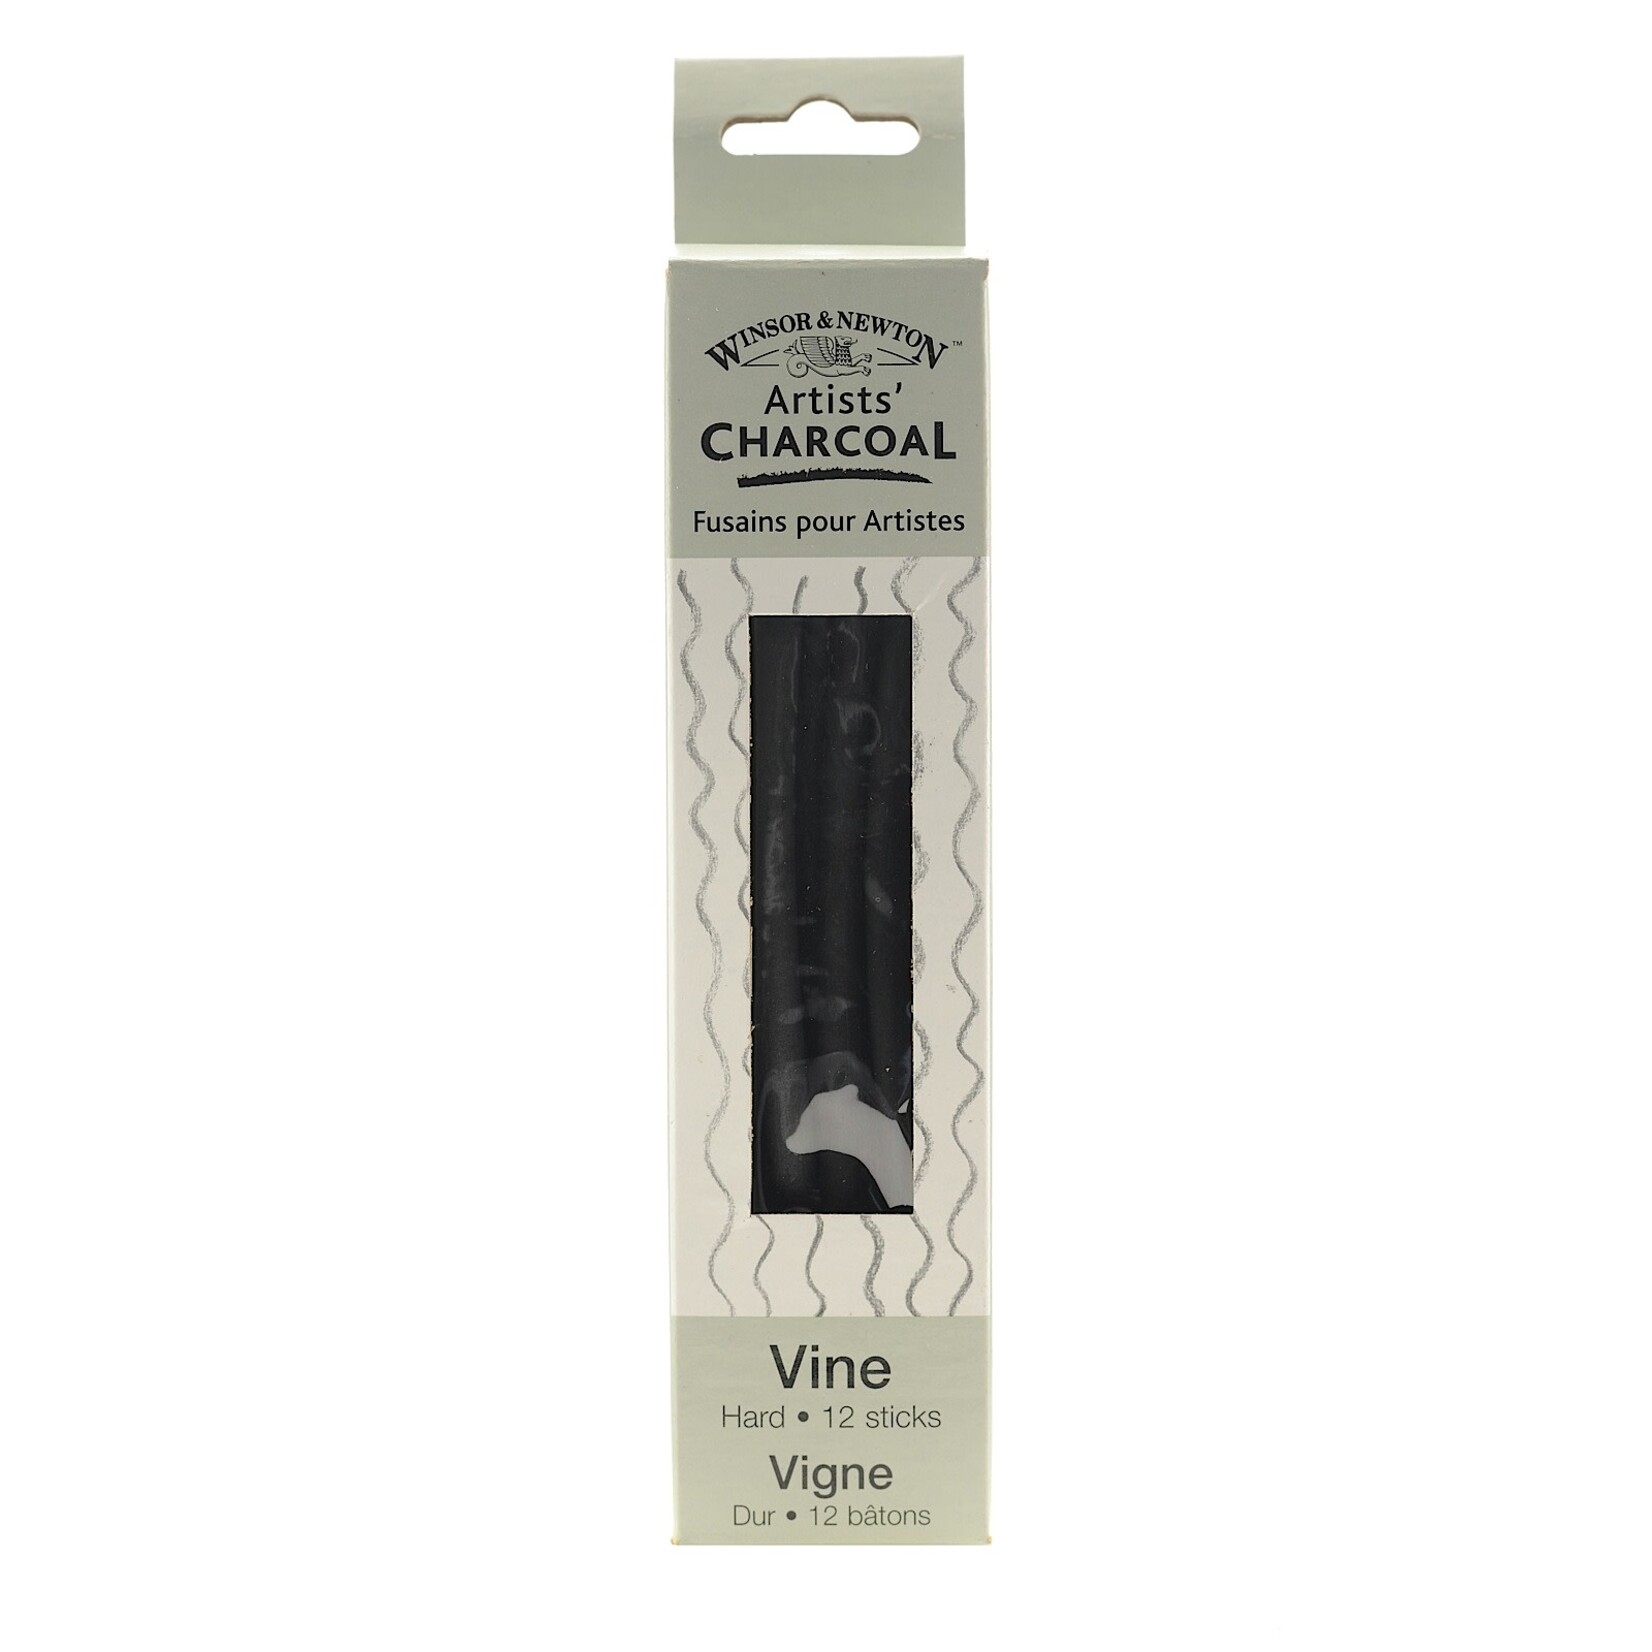 Winsor & Newton Artists' Vine Charcoal Hard - Box Of 12 Sticks